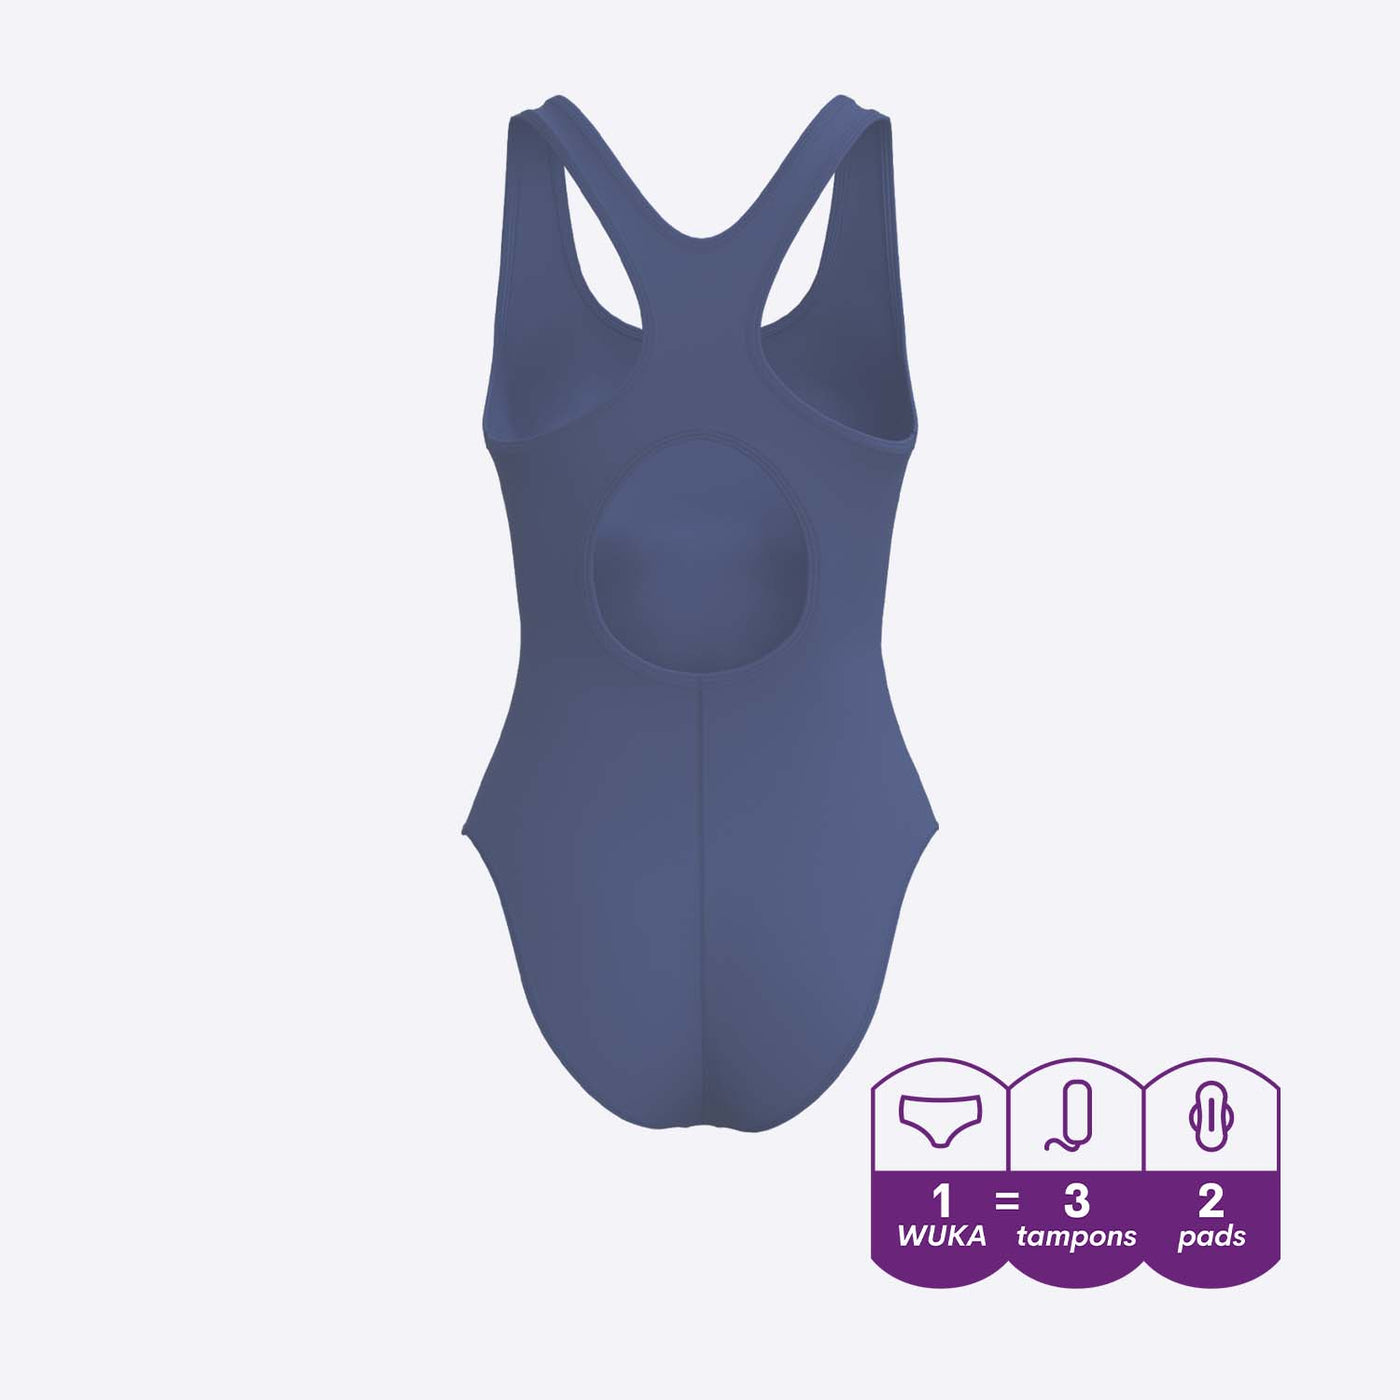 WUKA Period Racerback Swimsuit Style Light to Medium Absorbency Light Blue Colour Back 3D Render